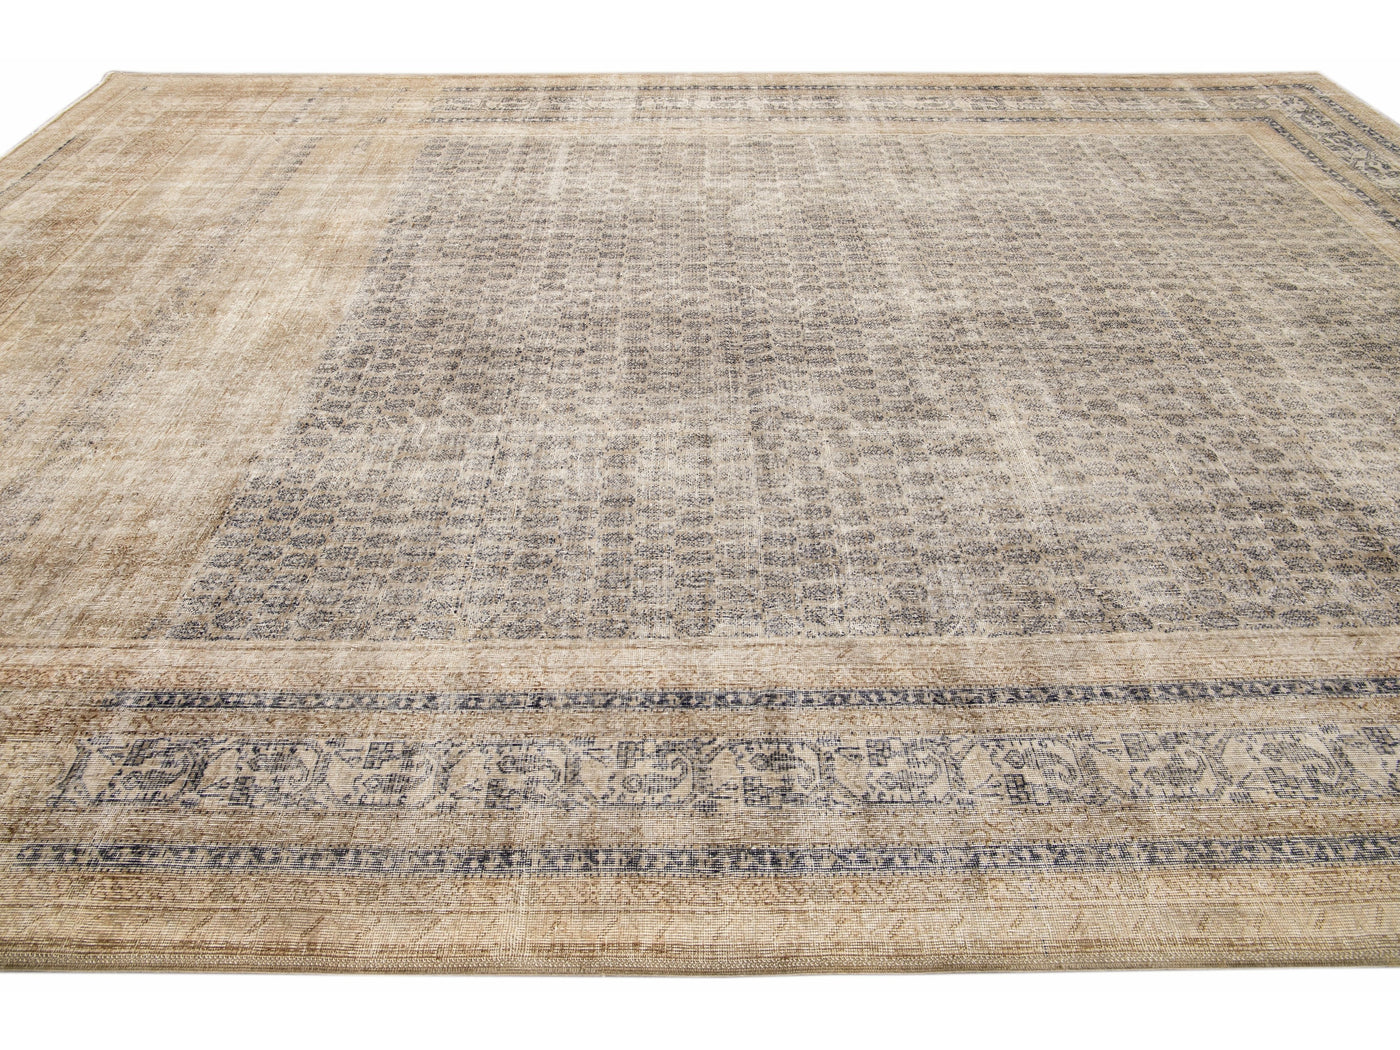 Antique Sivas Handmade Allover Designed Beige Oversize Wool Rug